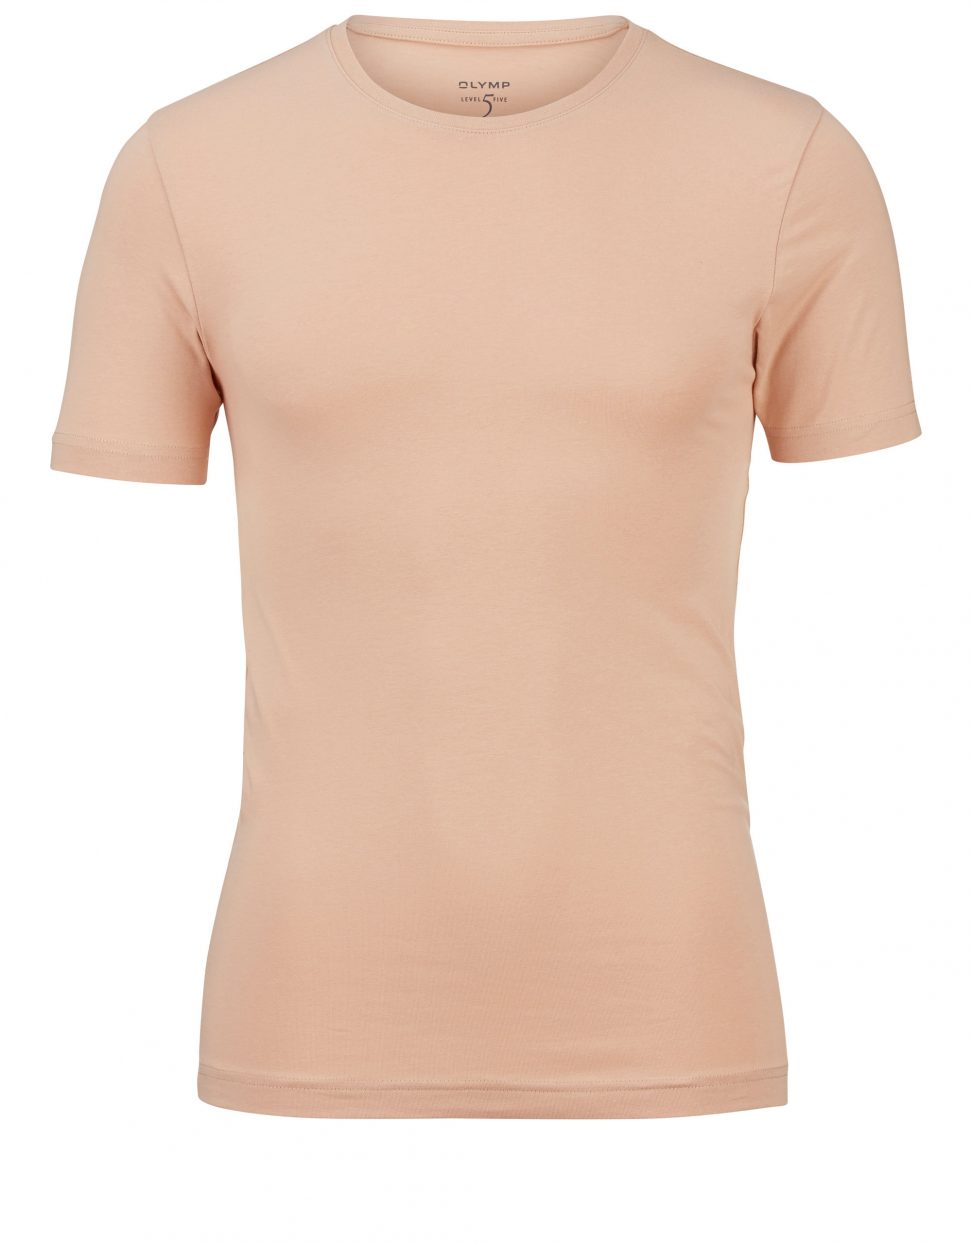 OLYMP T-shirt carmel body fit/ 08031224 rond-neck